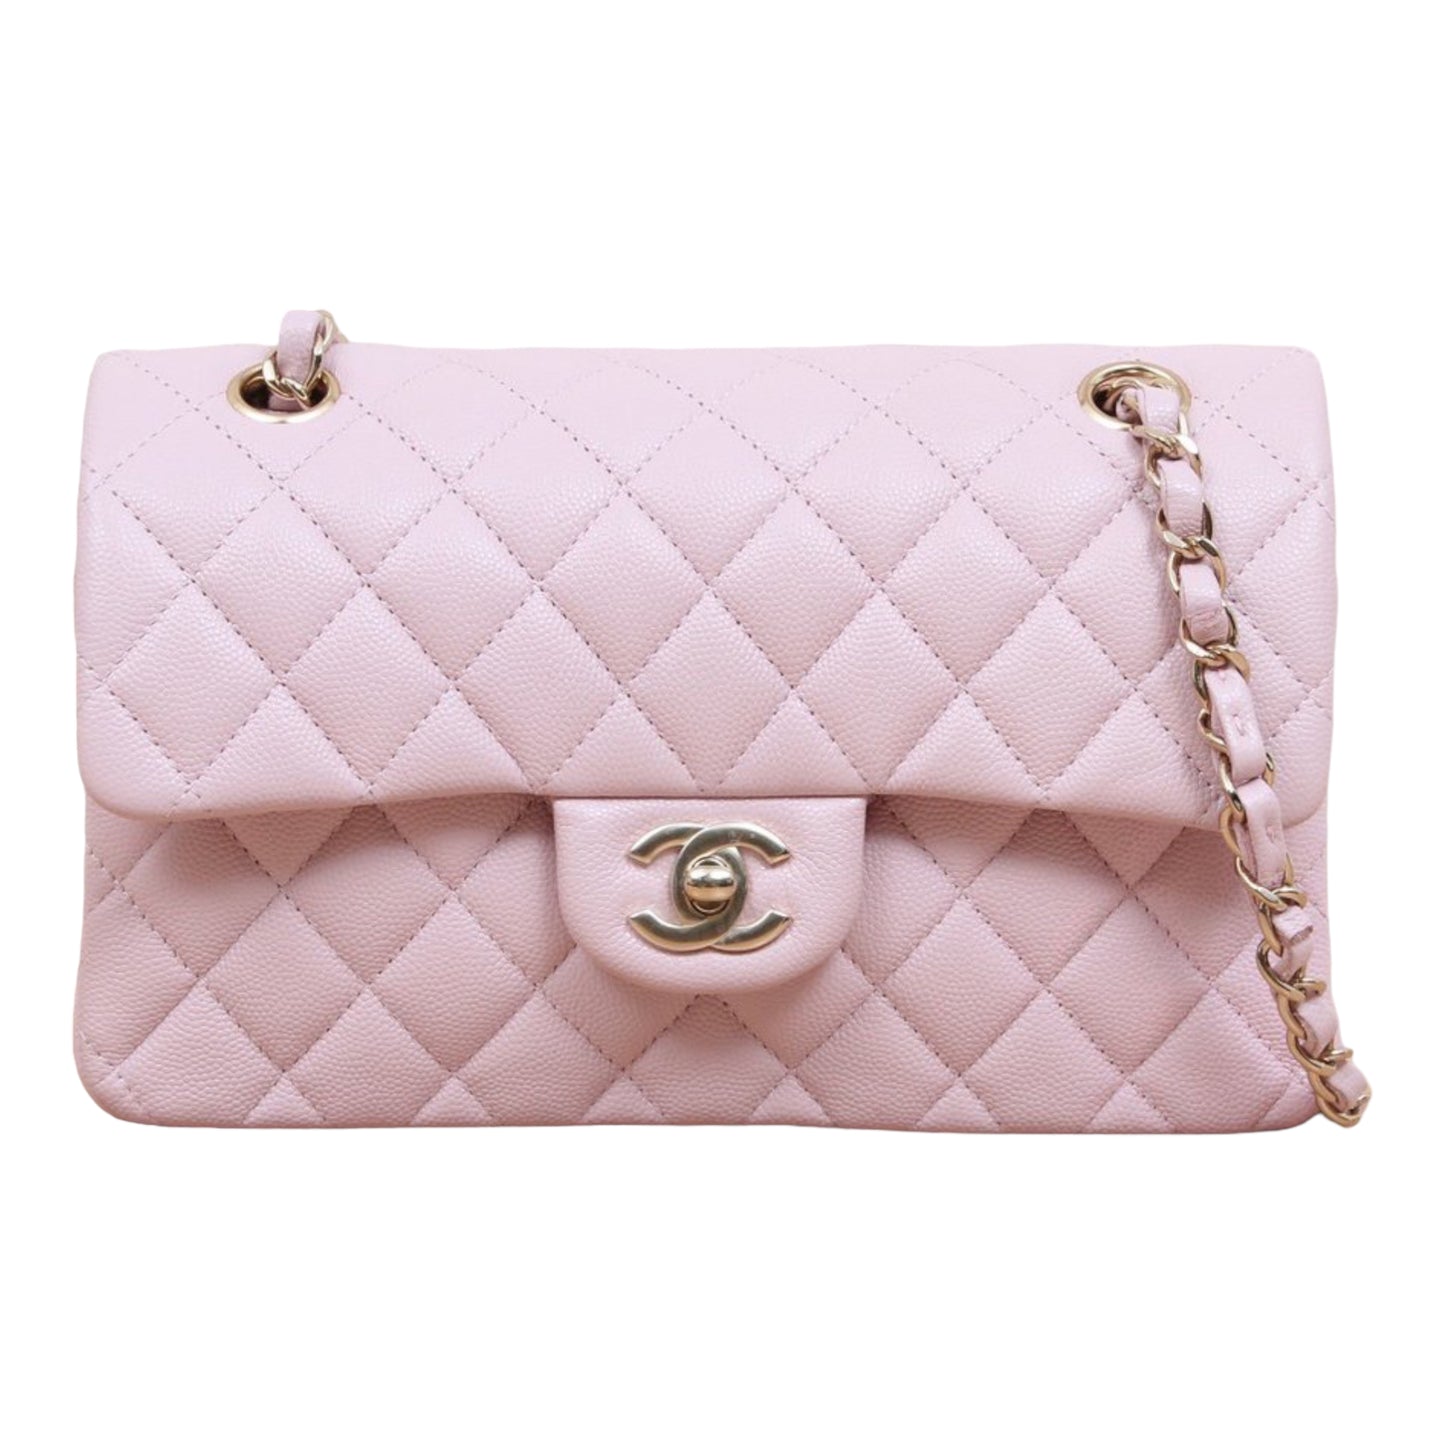 light pink chanel purse